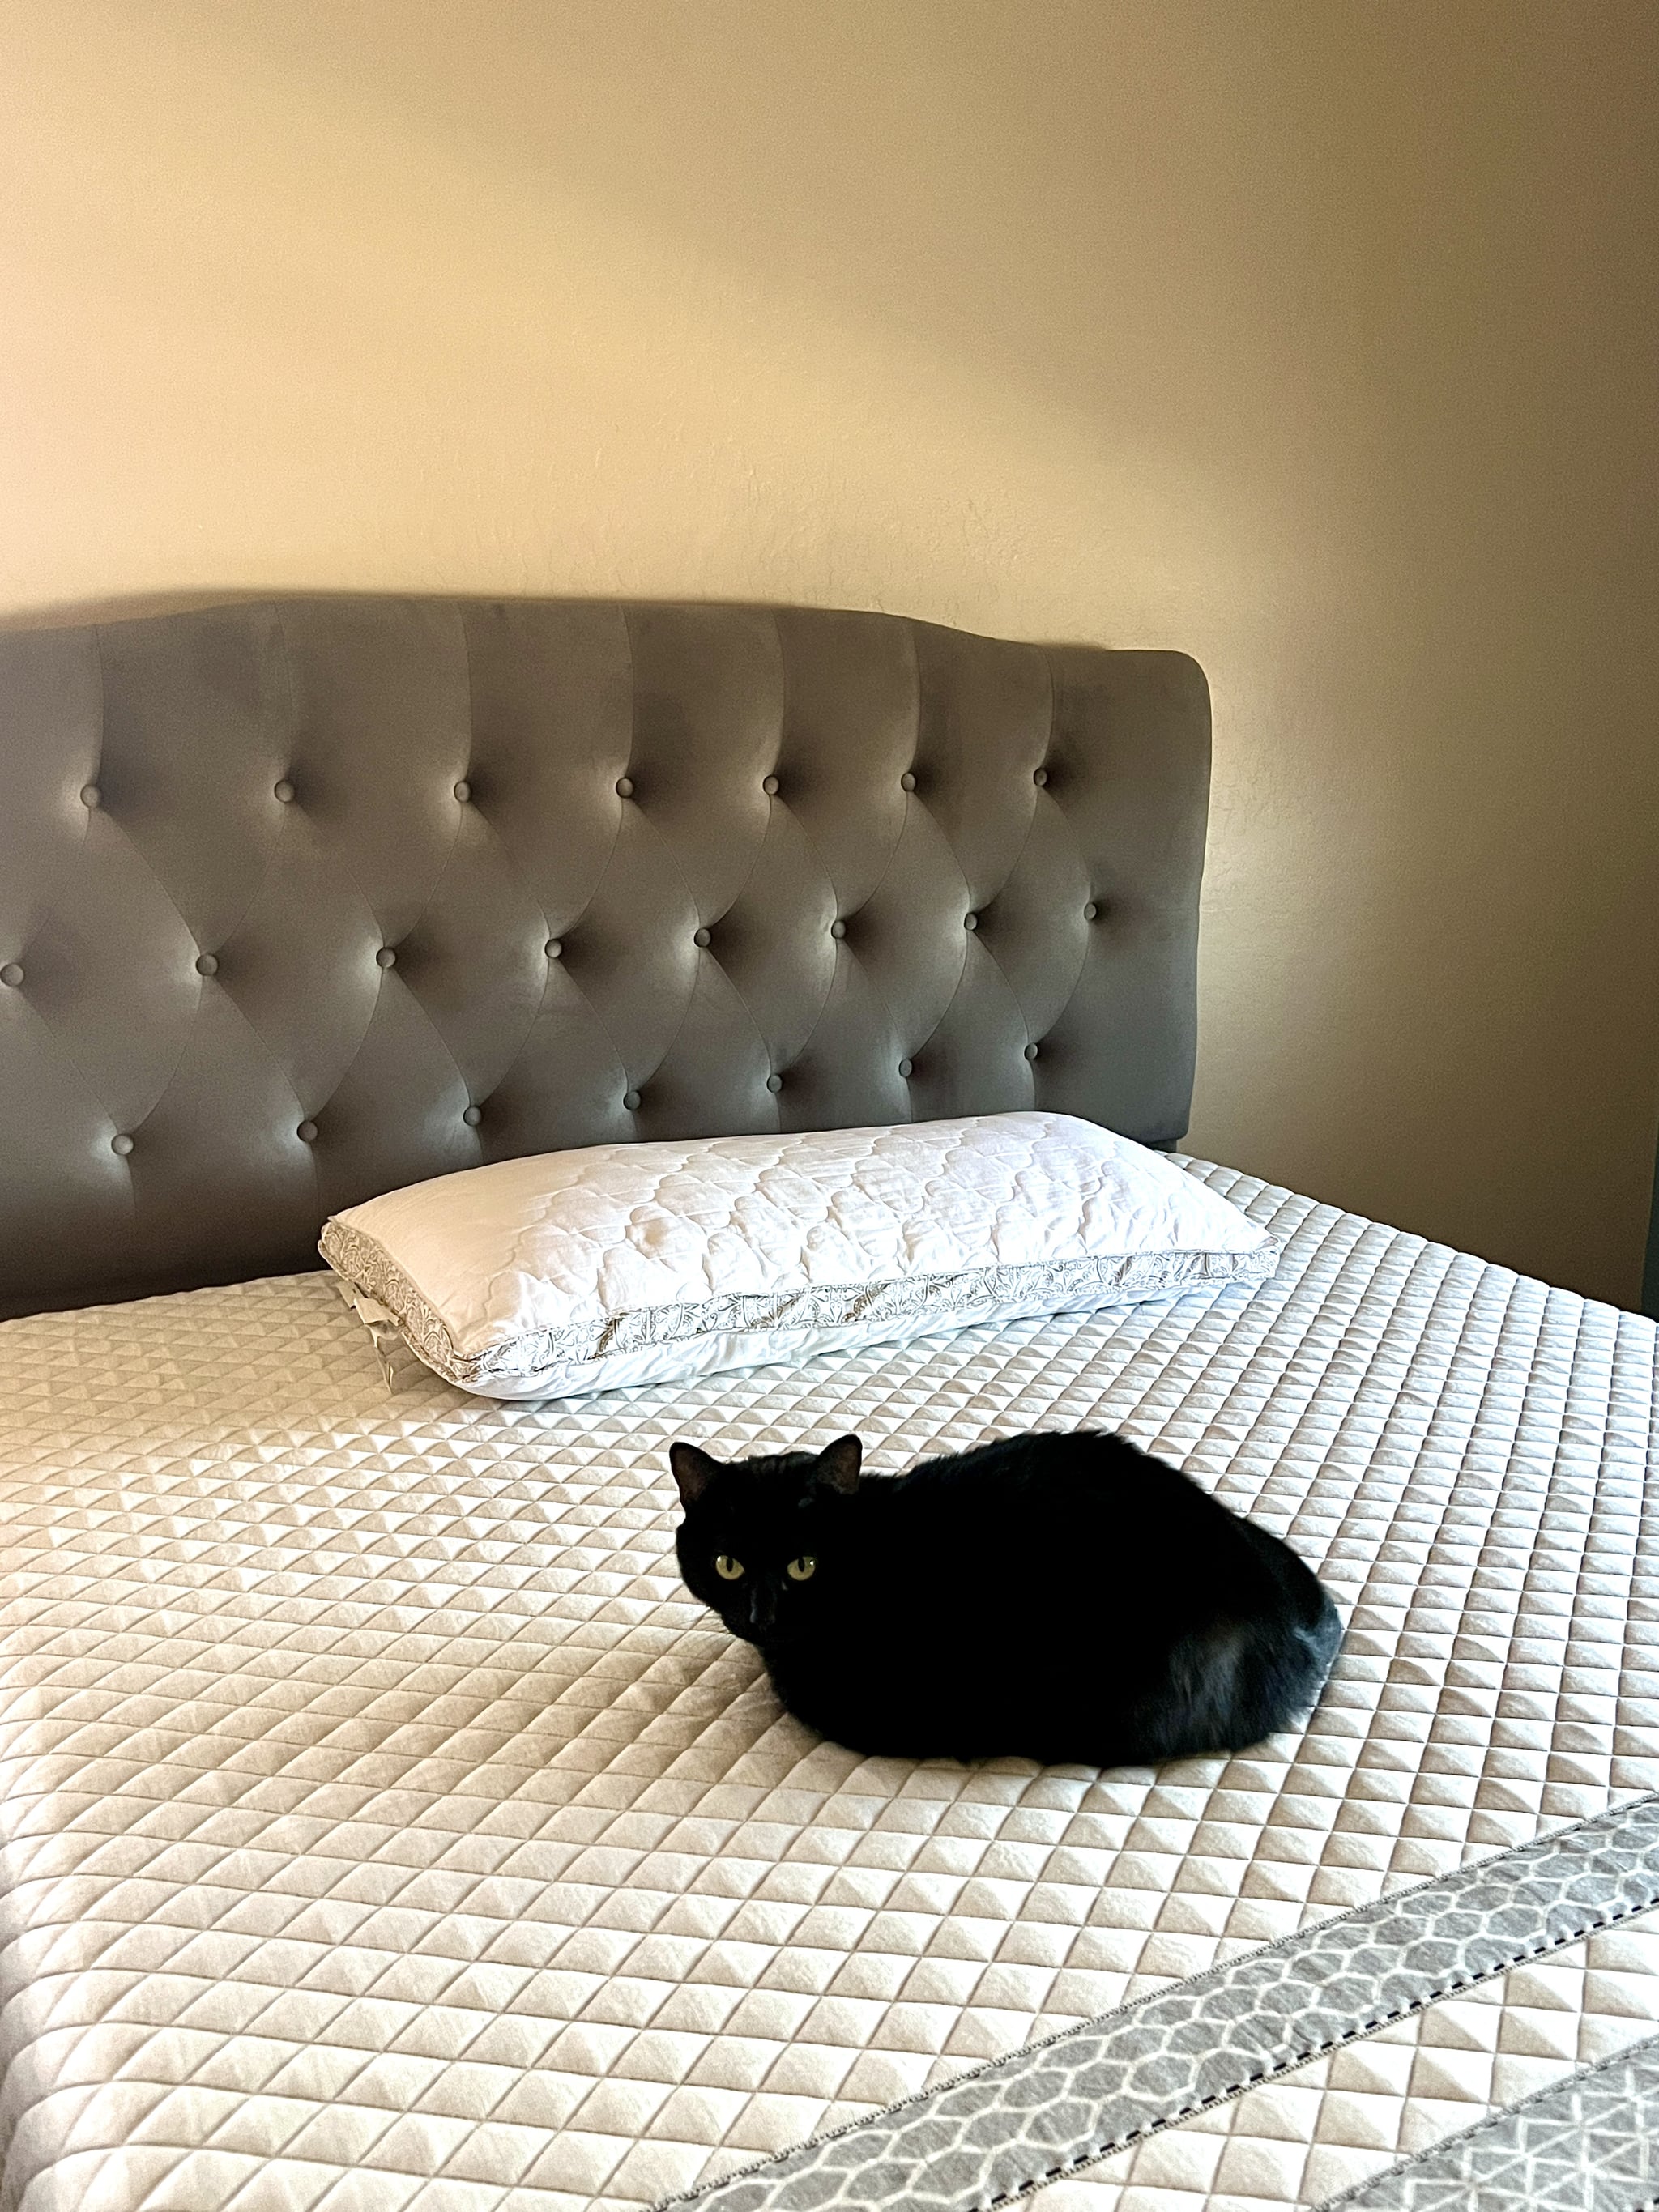 leesa sapira hybrid mattress in a bedroom